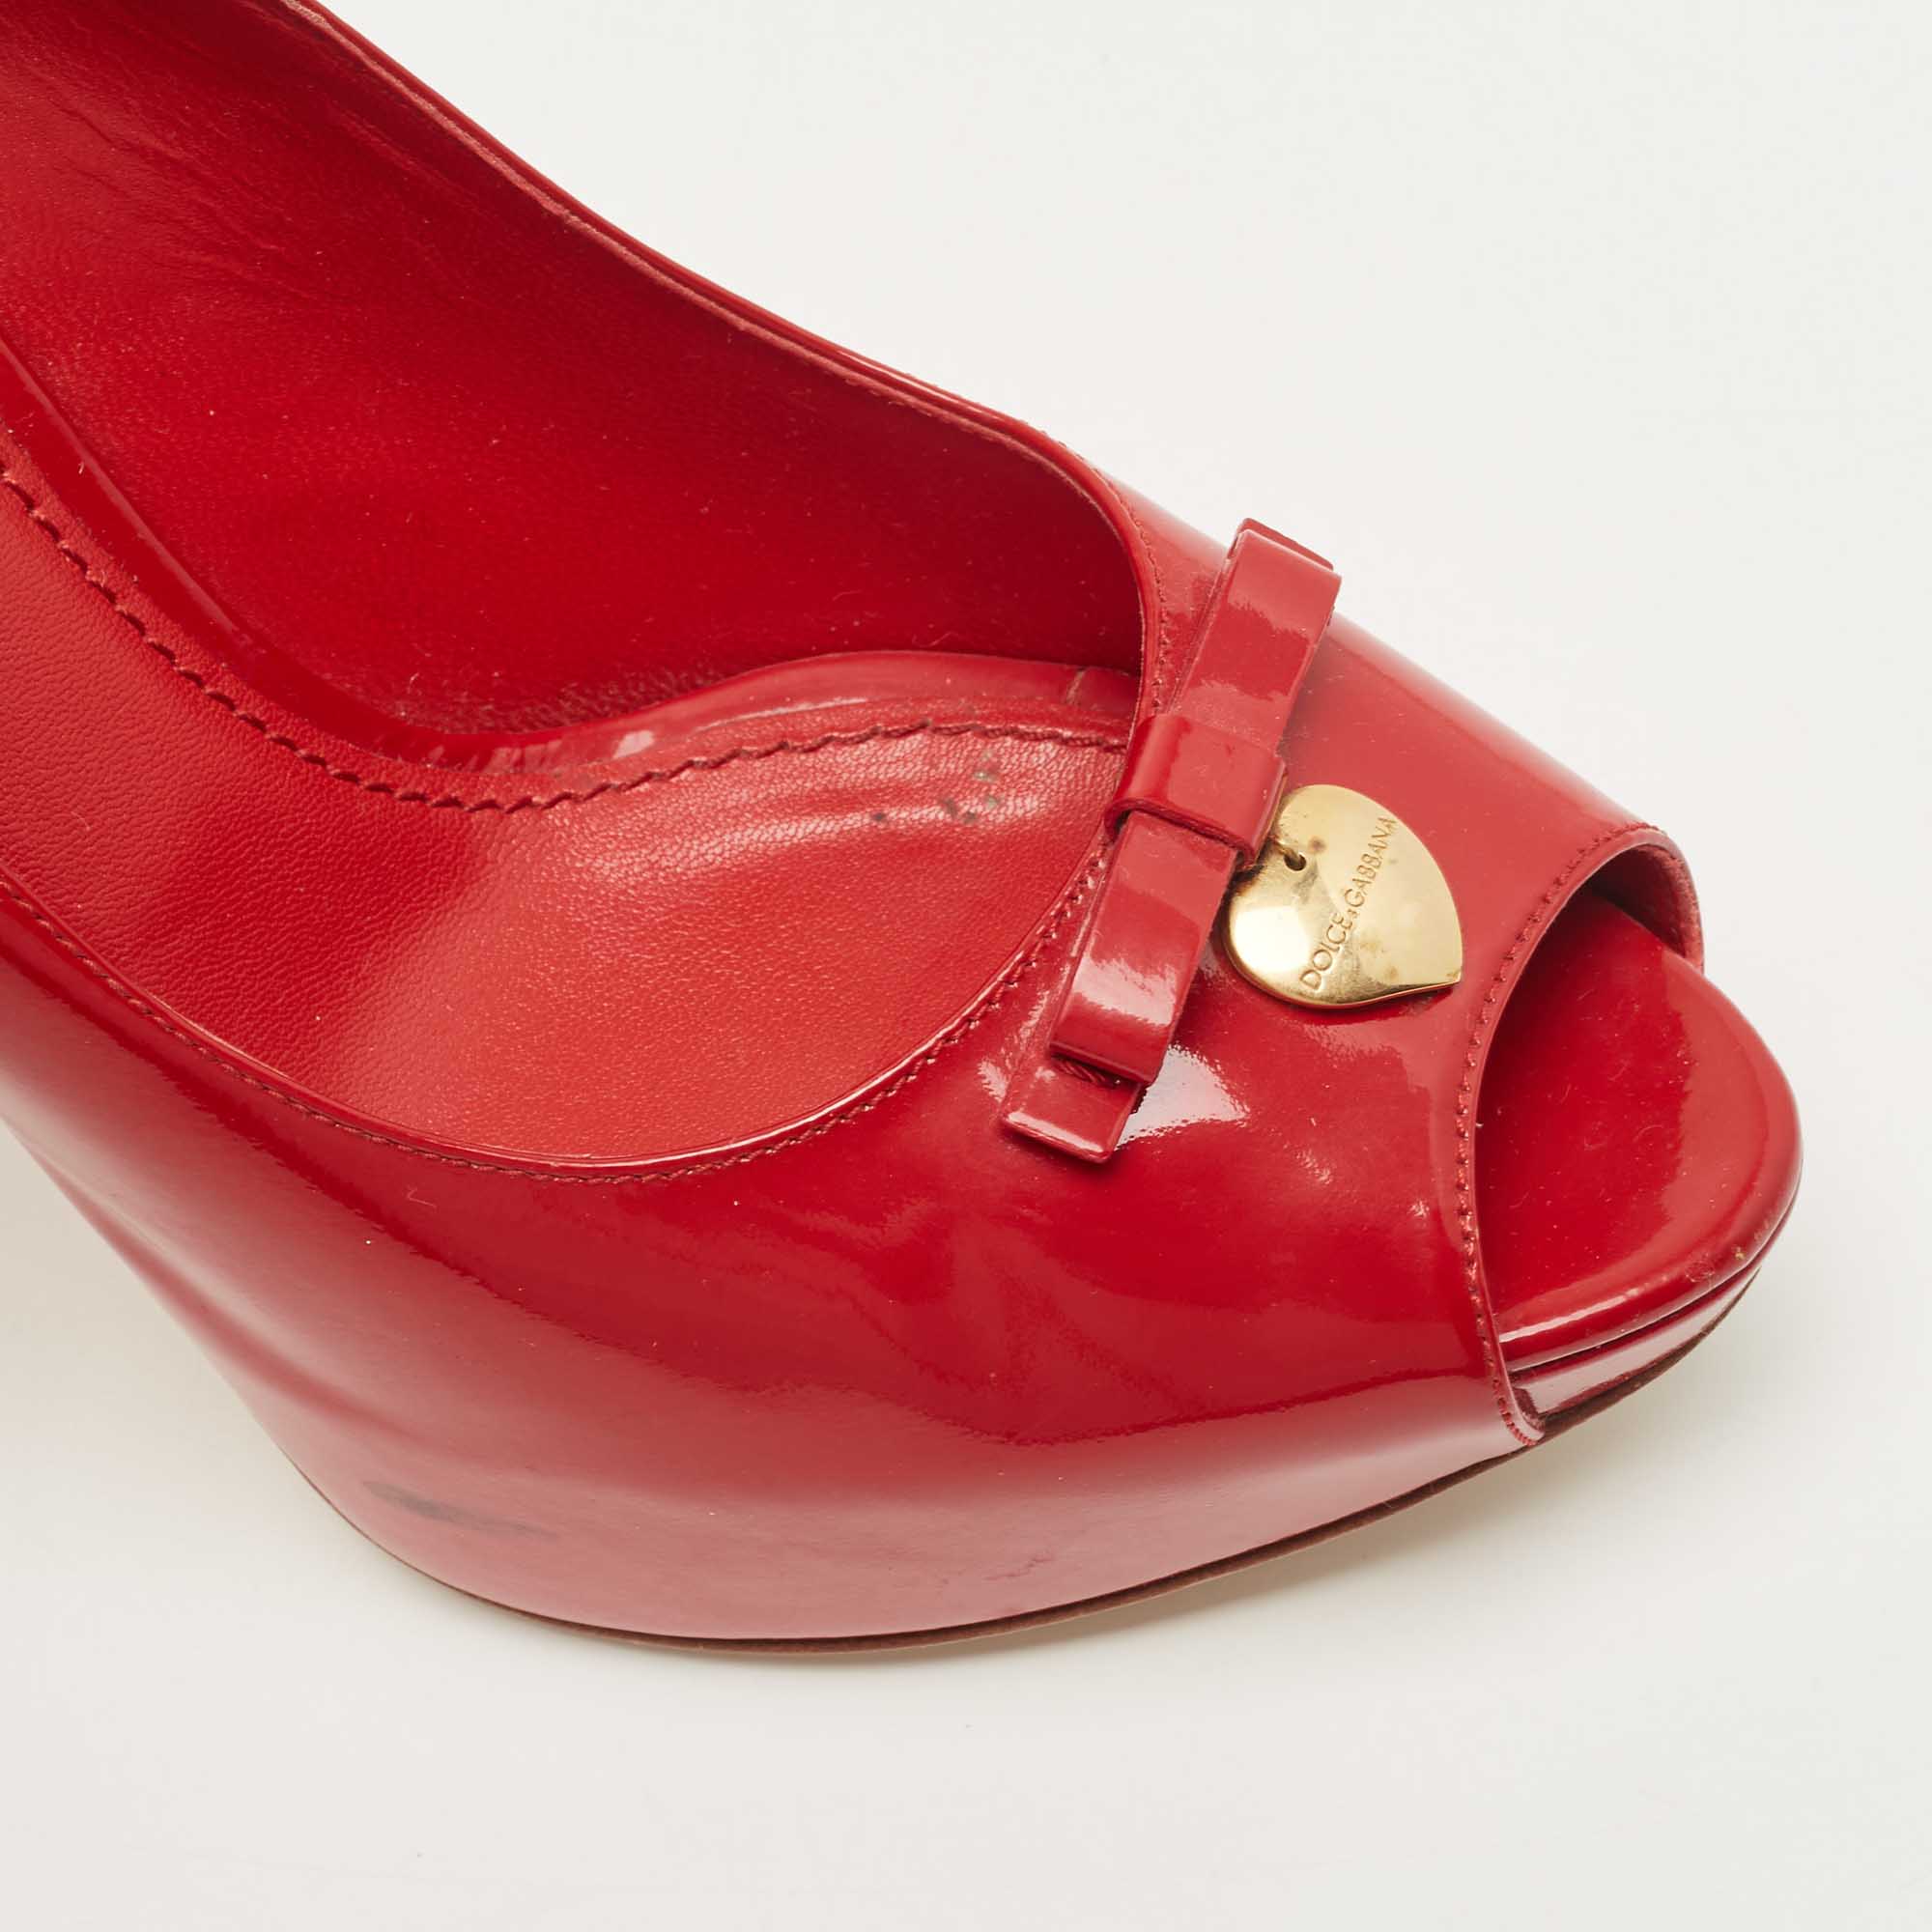 Dolce & Gabbana Red Patent Leather Bow Peep Toe Platform Pumps Size 38